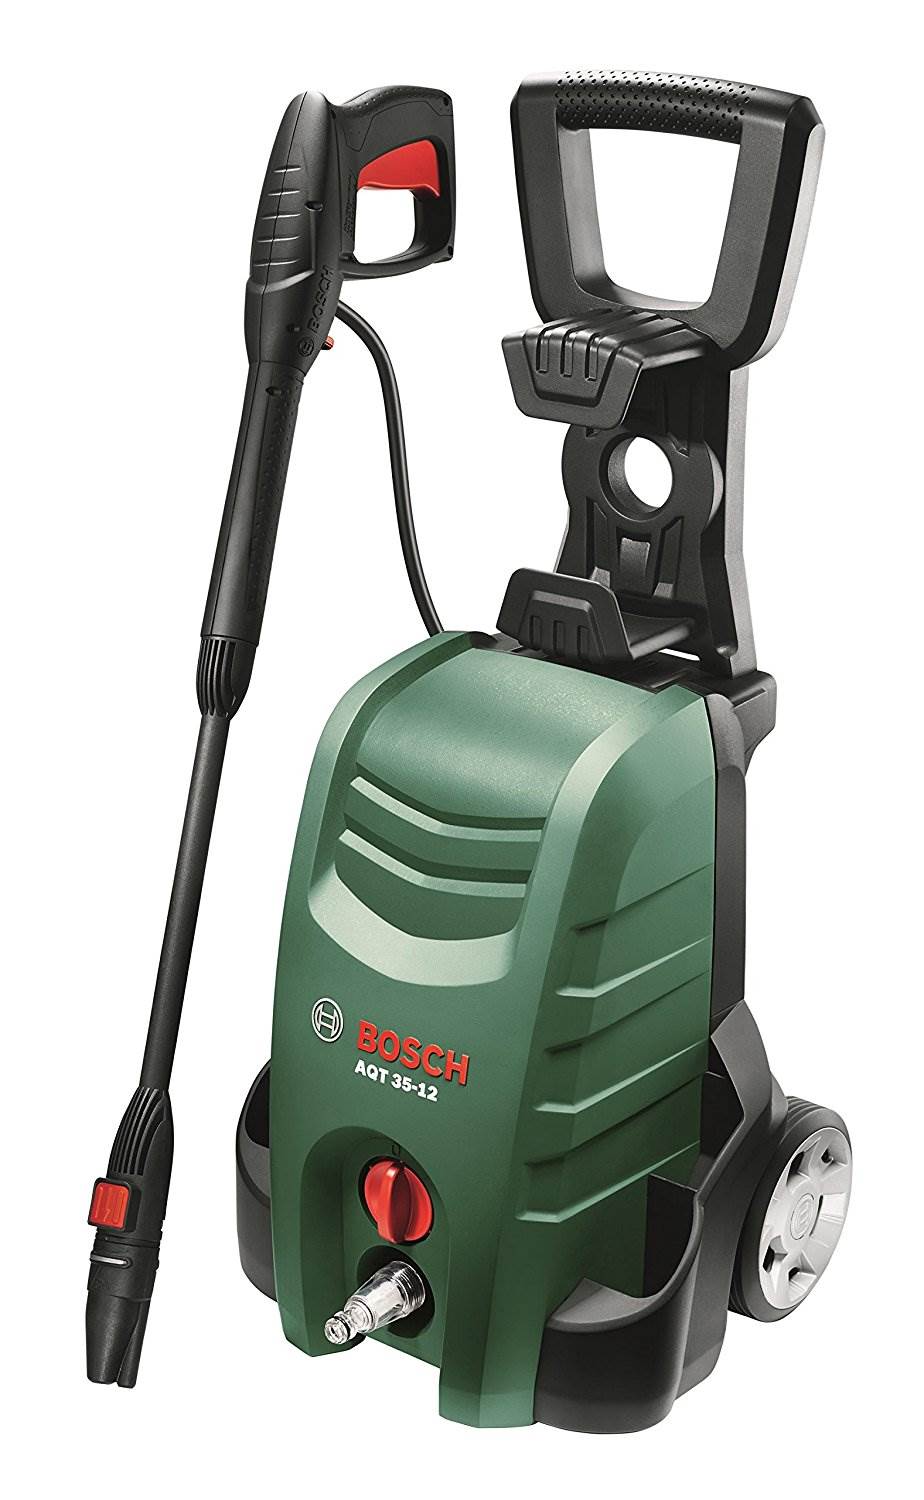 Bosch AQT35-12 Pressure Washer m4gGreenm5g